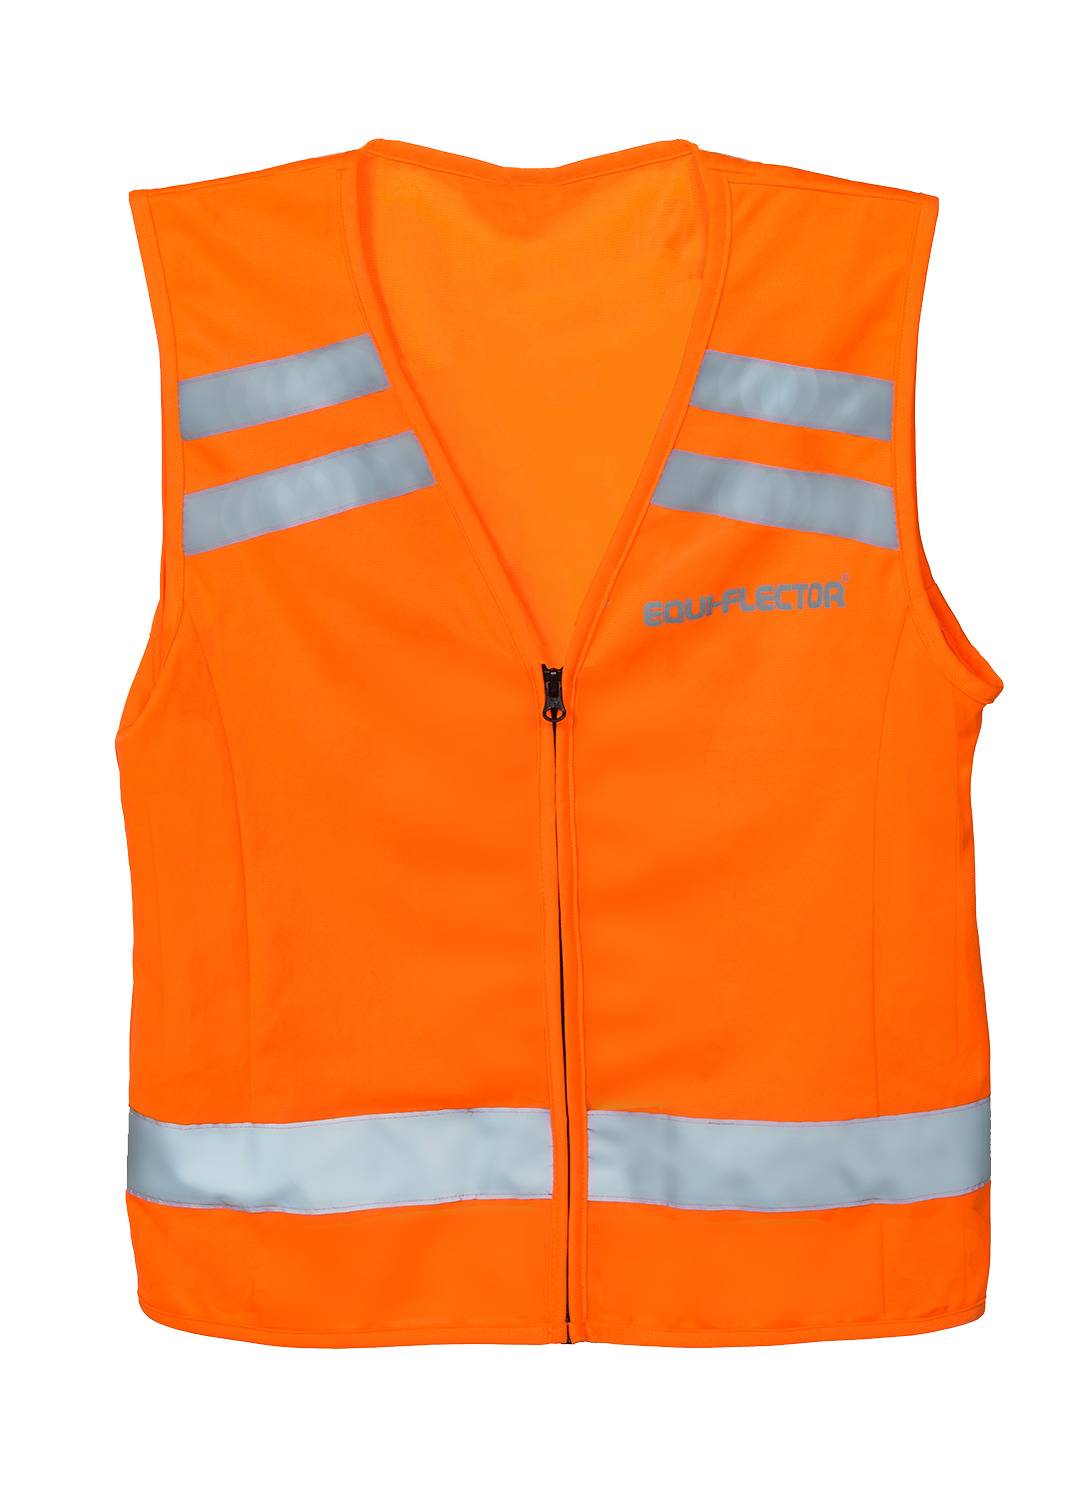 Adults Shires Equi Flector Safety Vest 